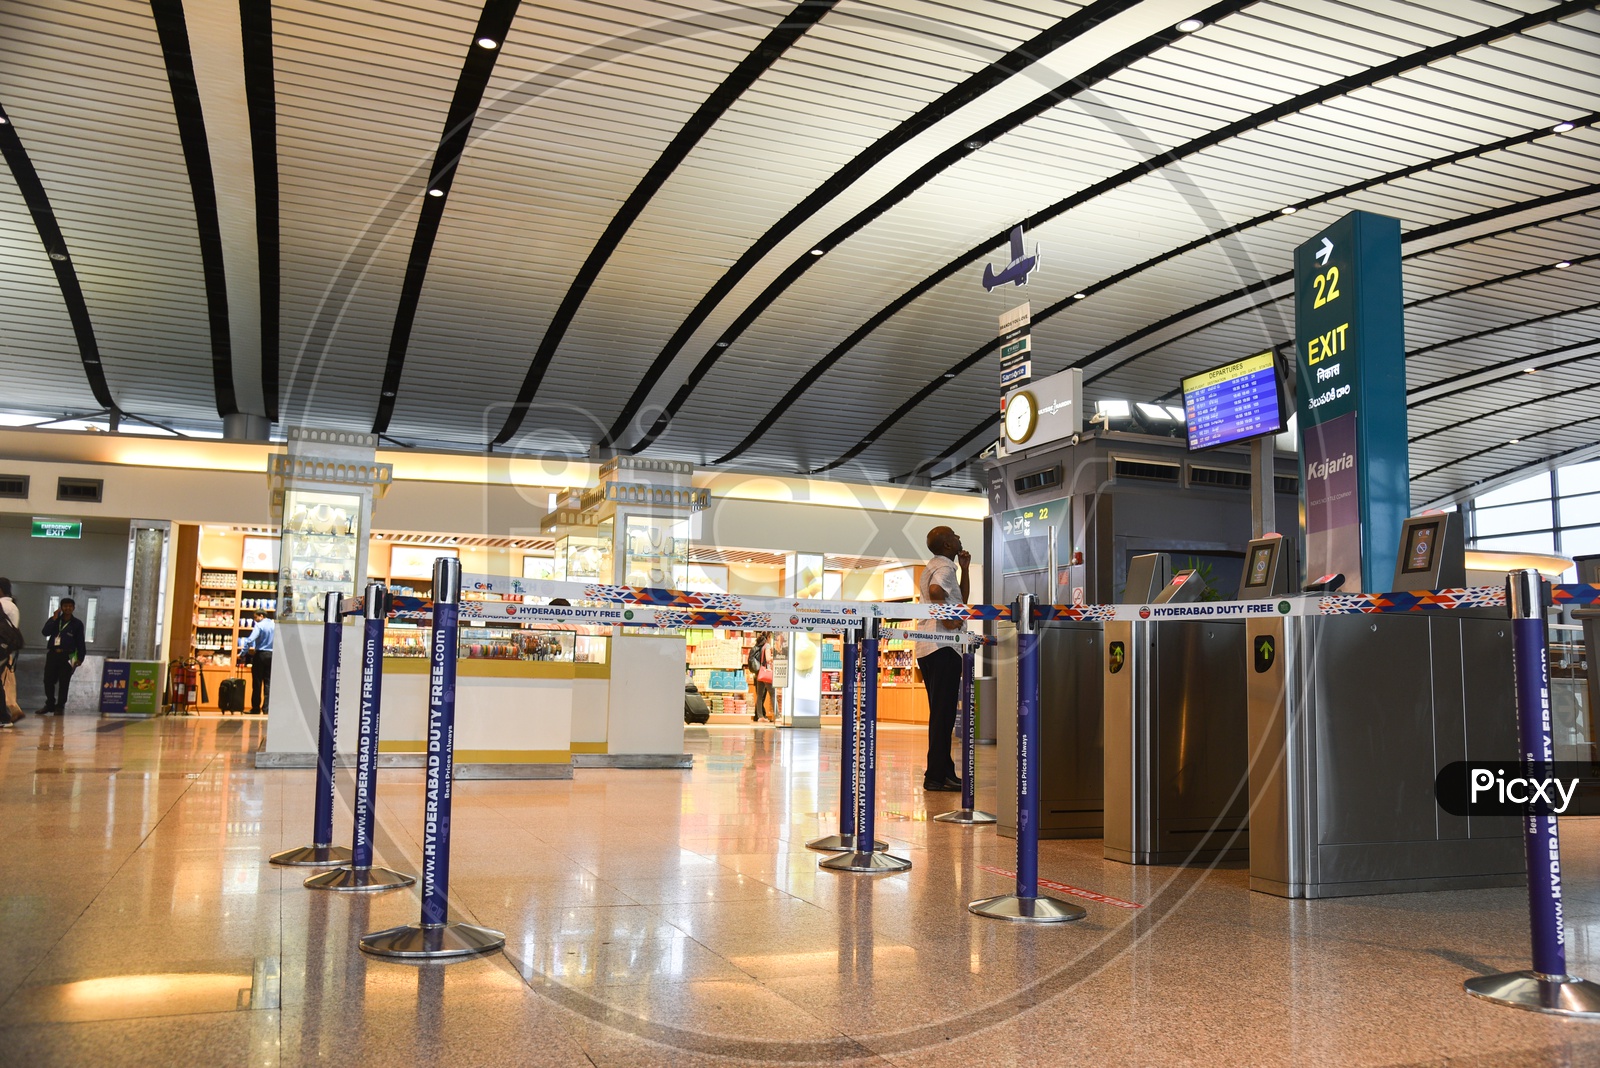 Airport  Scenes  With  Passengers   And Departure Flights  Display Screens